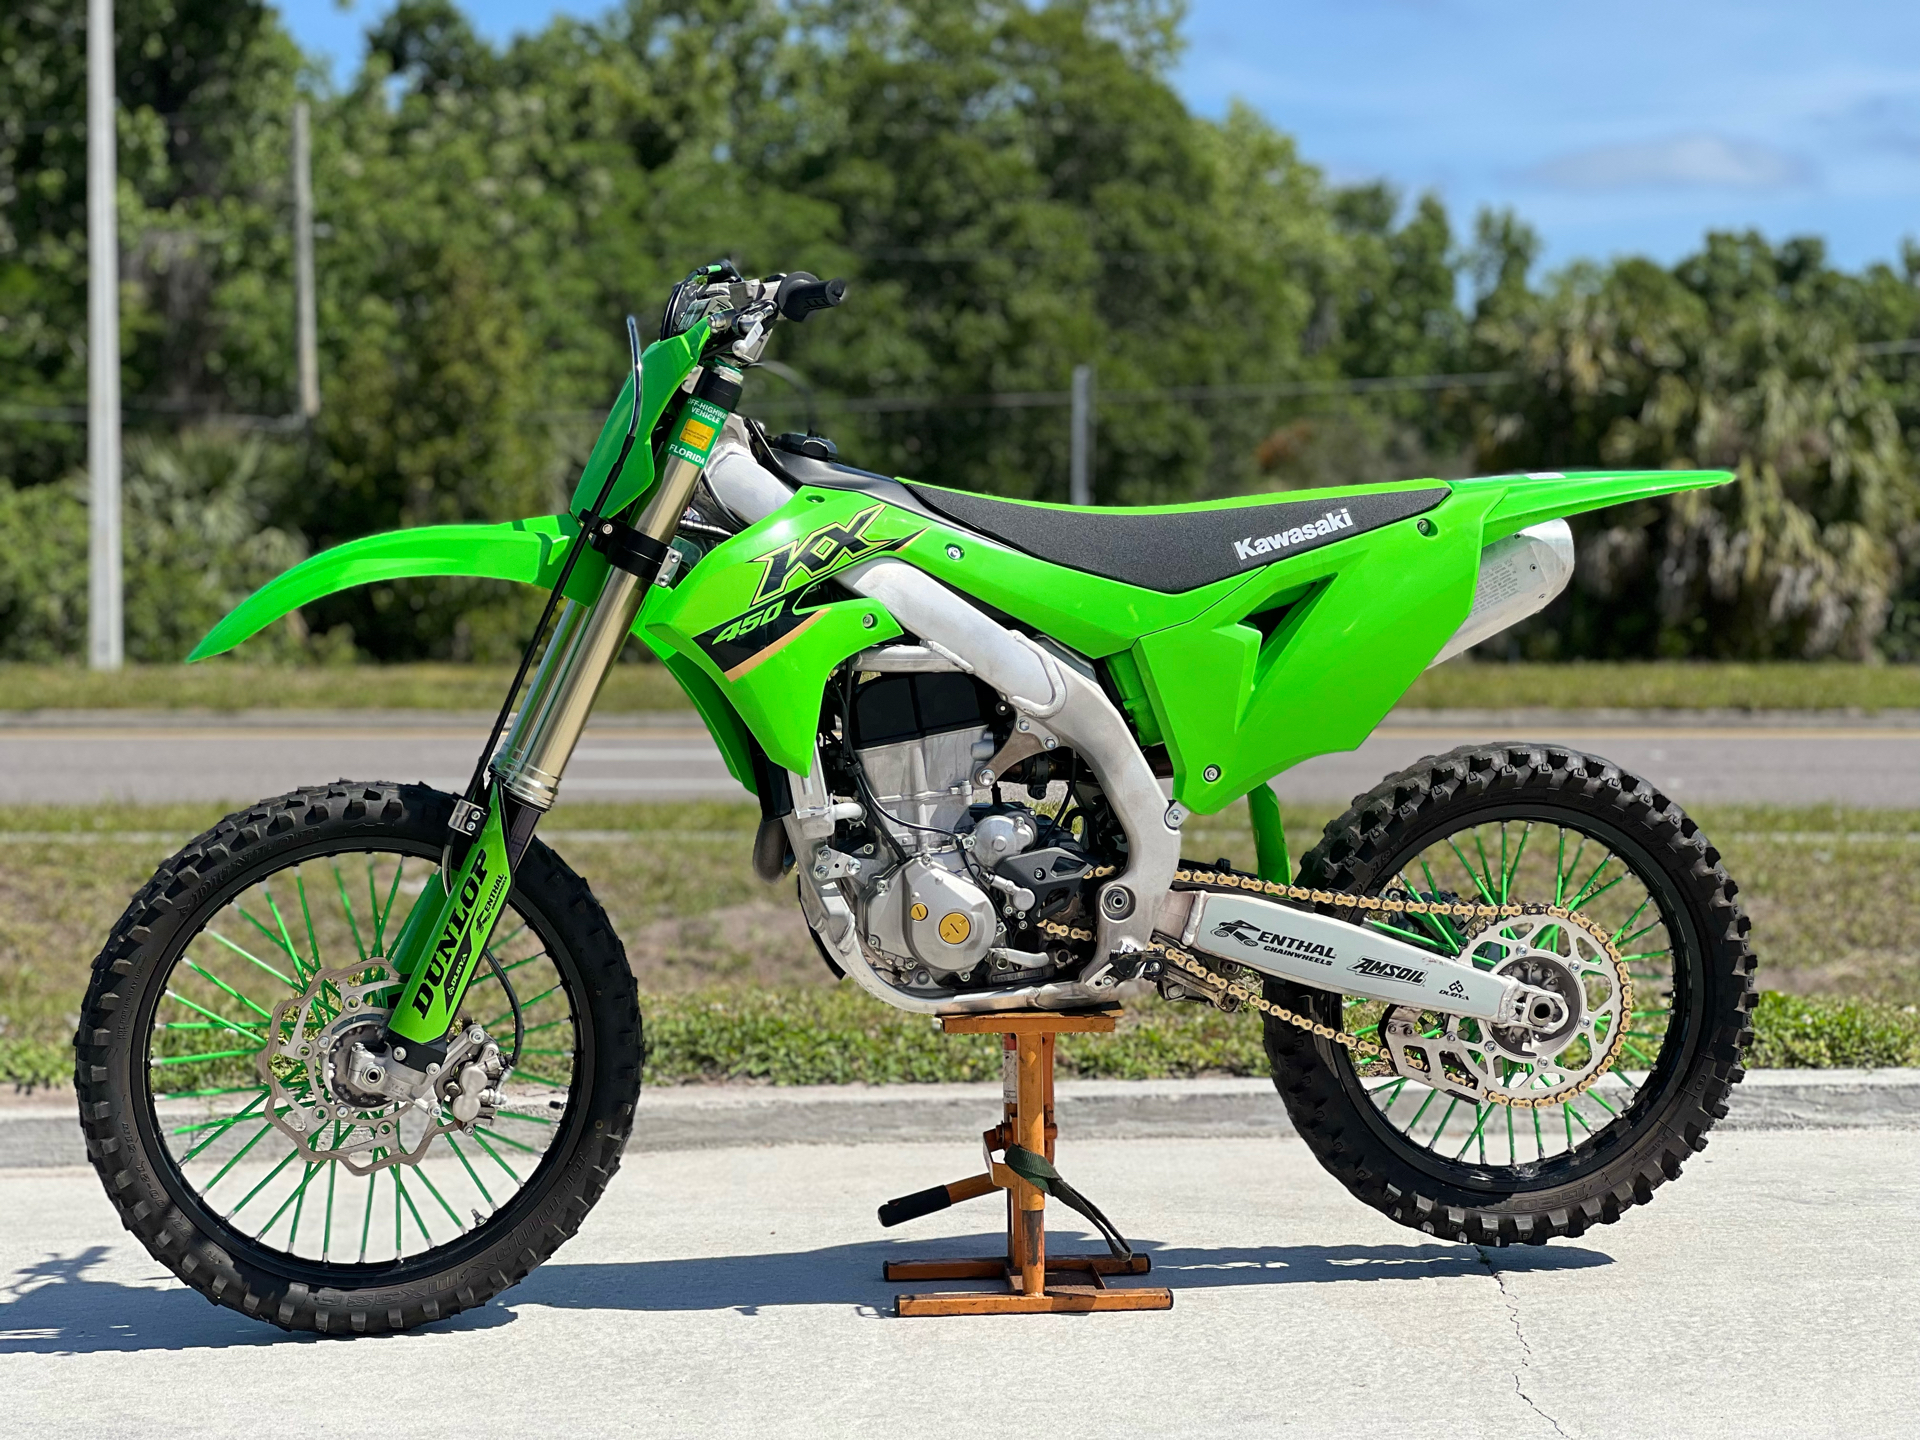 2022 Kawasaki KX 450 in Orlando, Florida - Photo 1